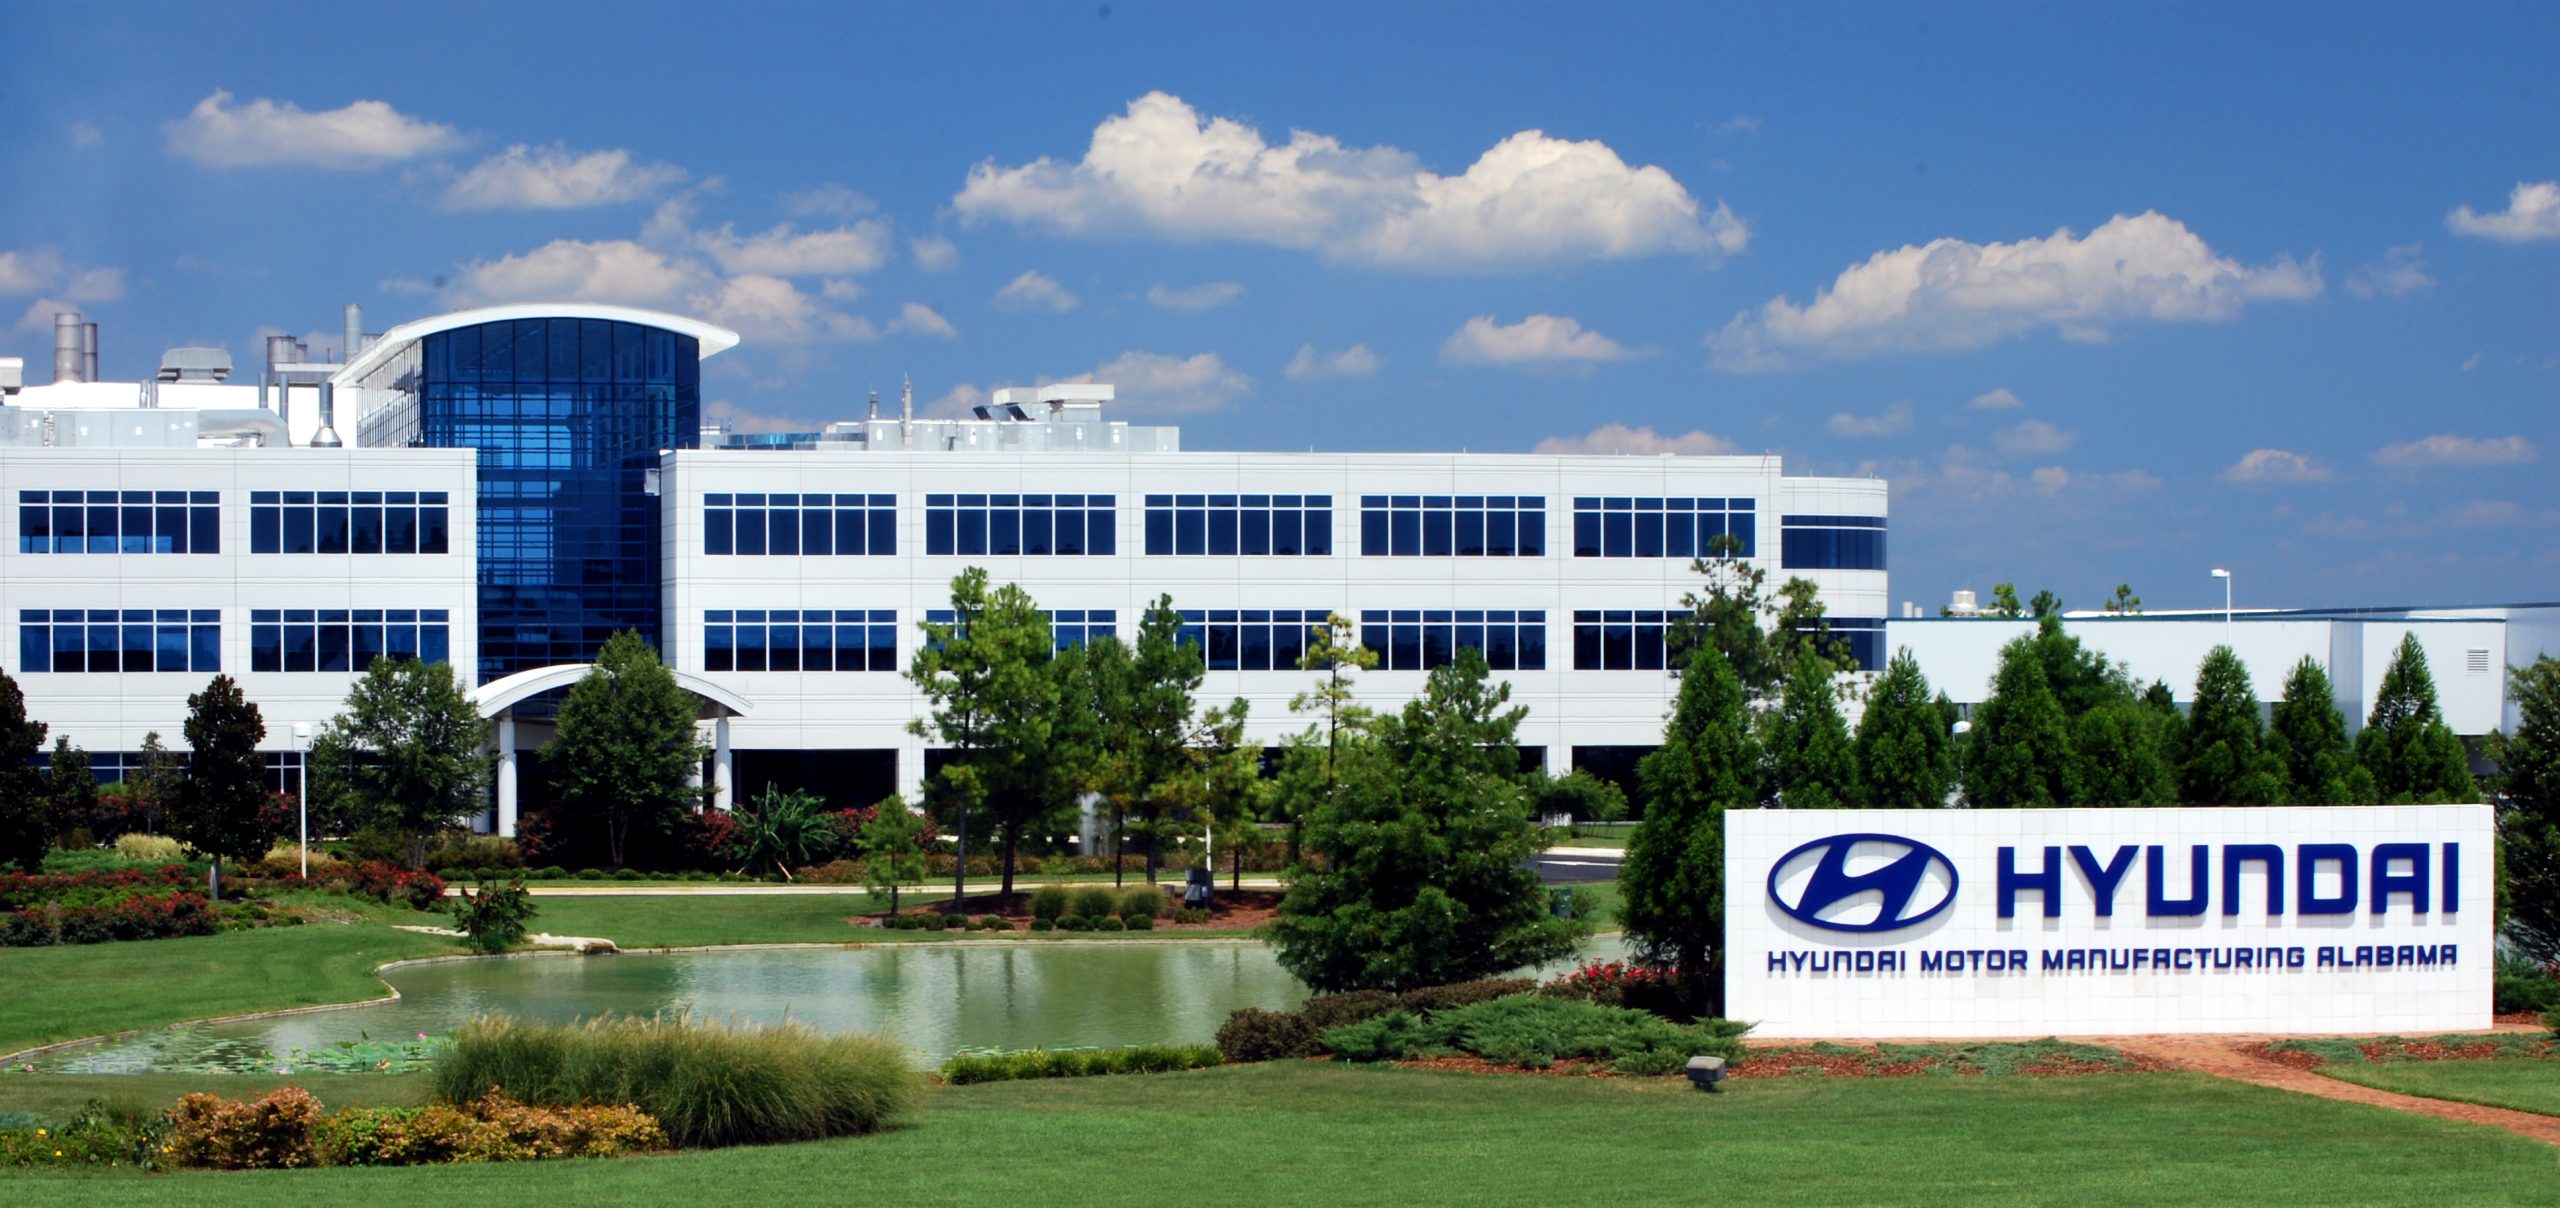 About HMMA – Hyundai Motor Manufacturing Alabama, LLC (HMMA)